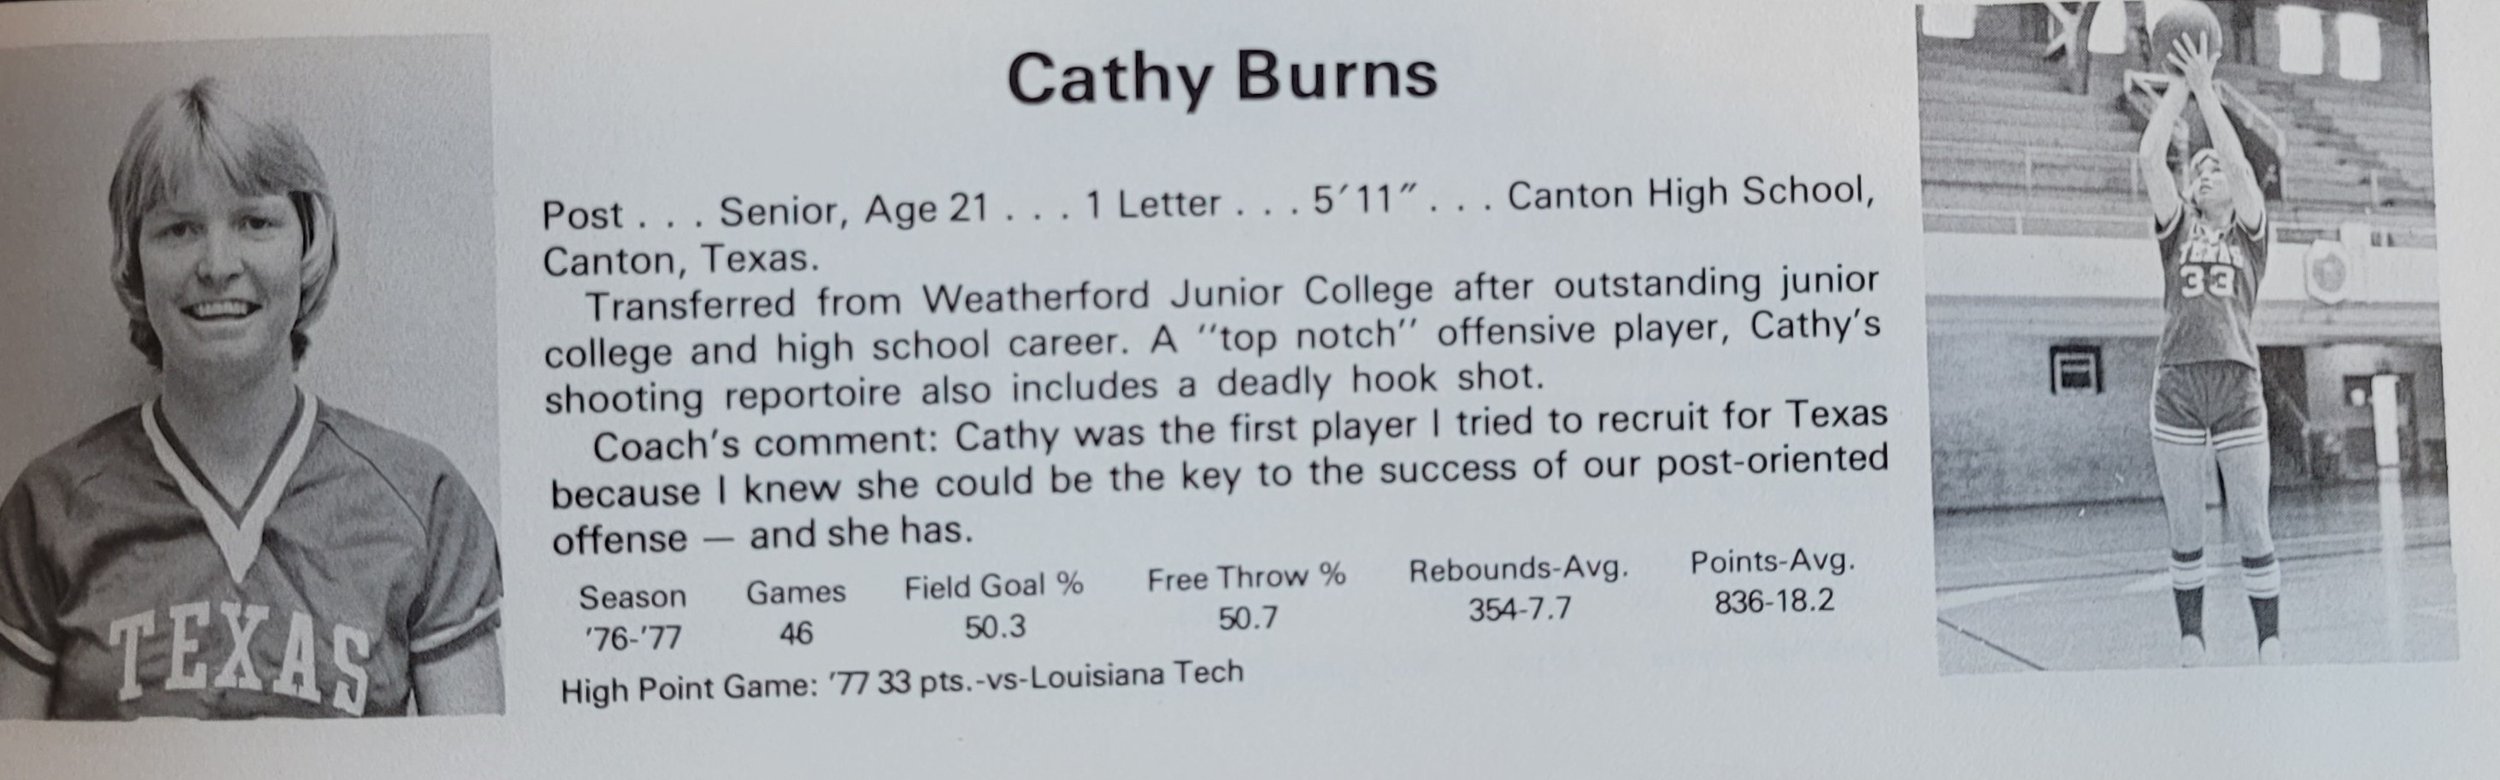 Cathy Burns